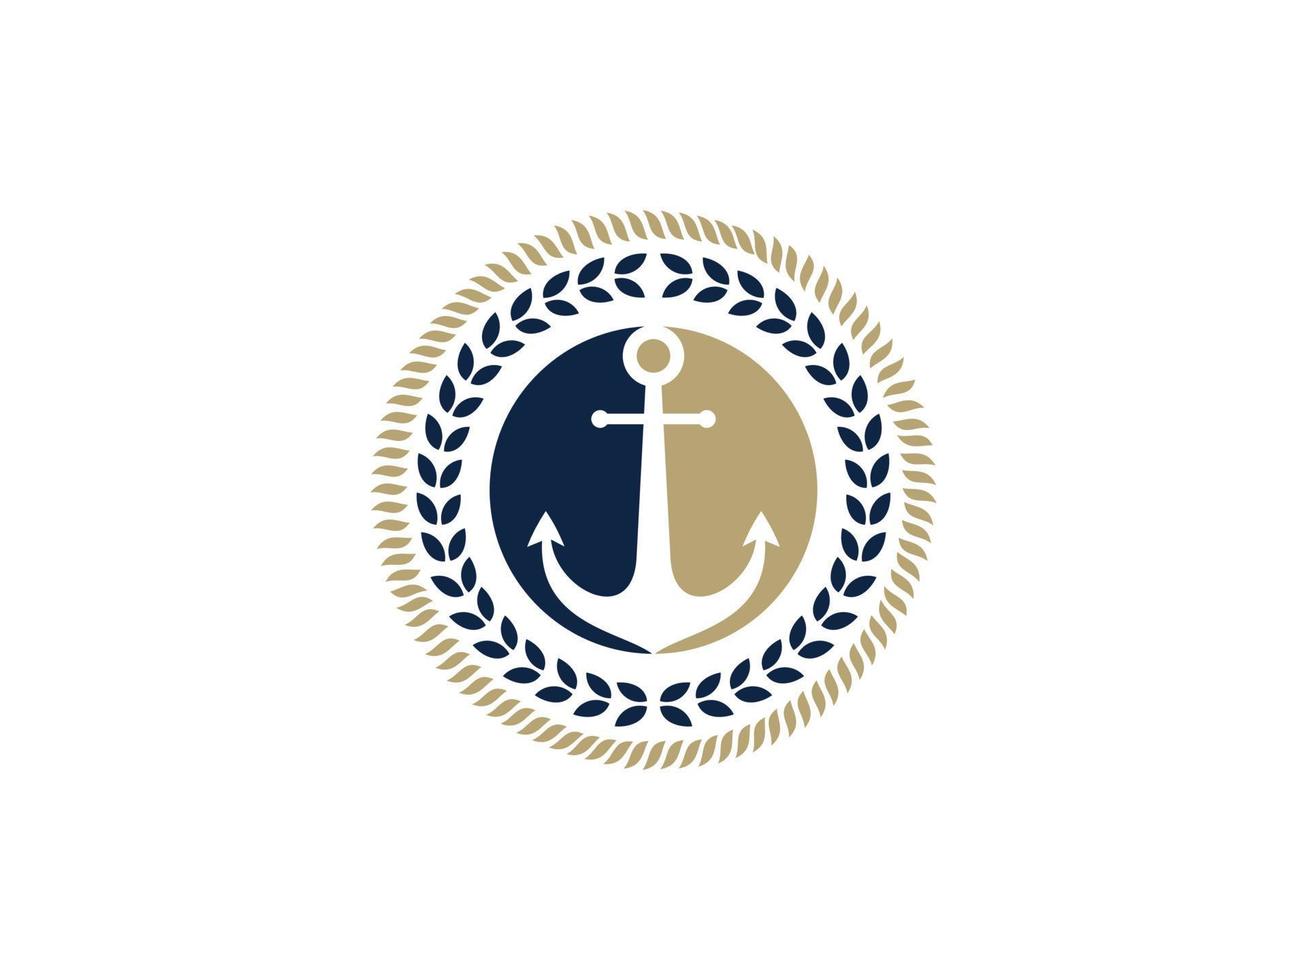 âncora, corda e coroa para design de logotipo de barco de navio marinho. utilizável para logotipos de negócios e branding. elemento de modelo de design de logotipo de vetor plana.